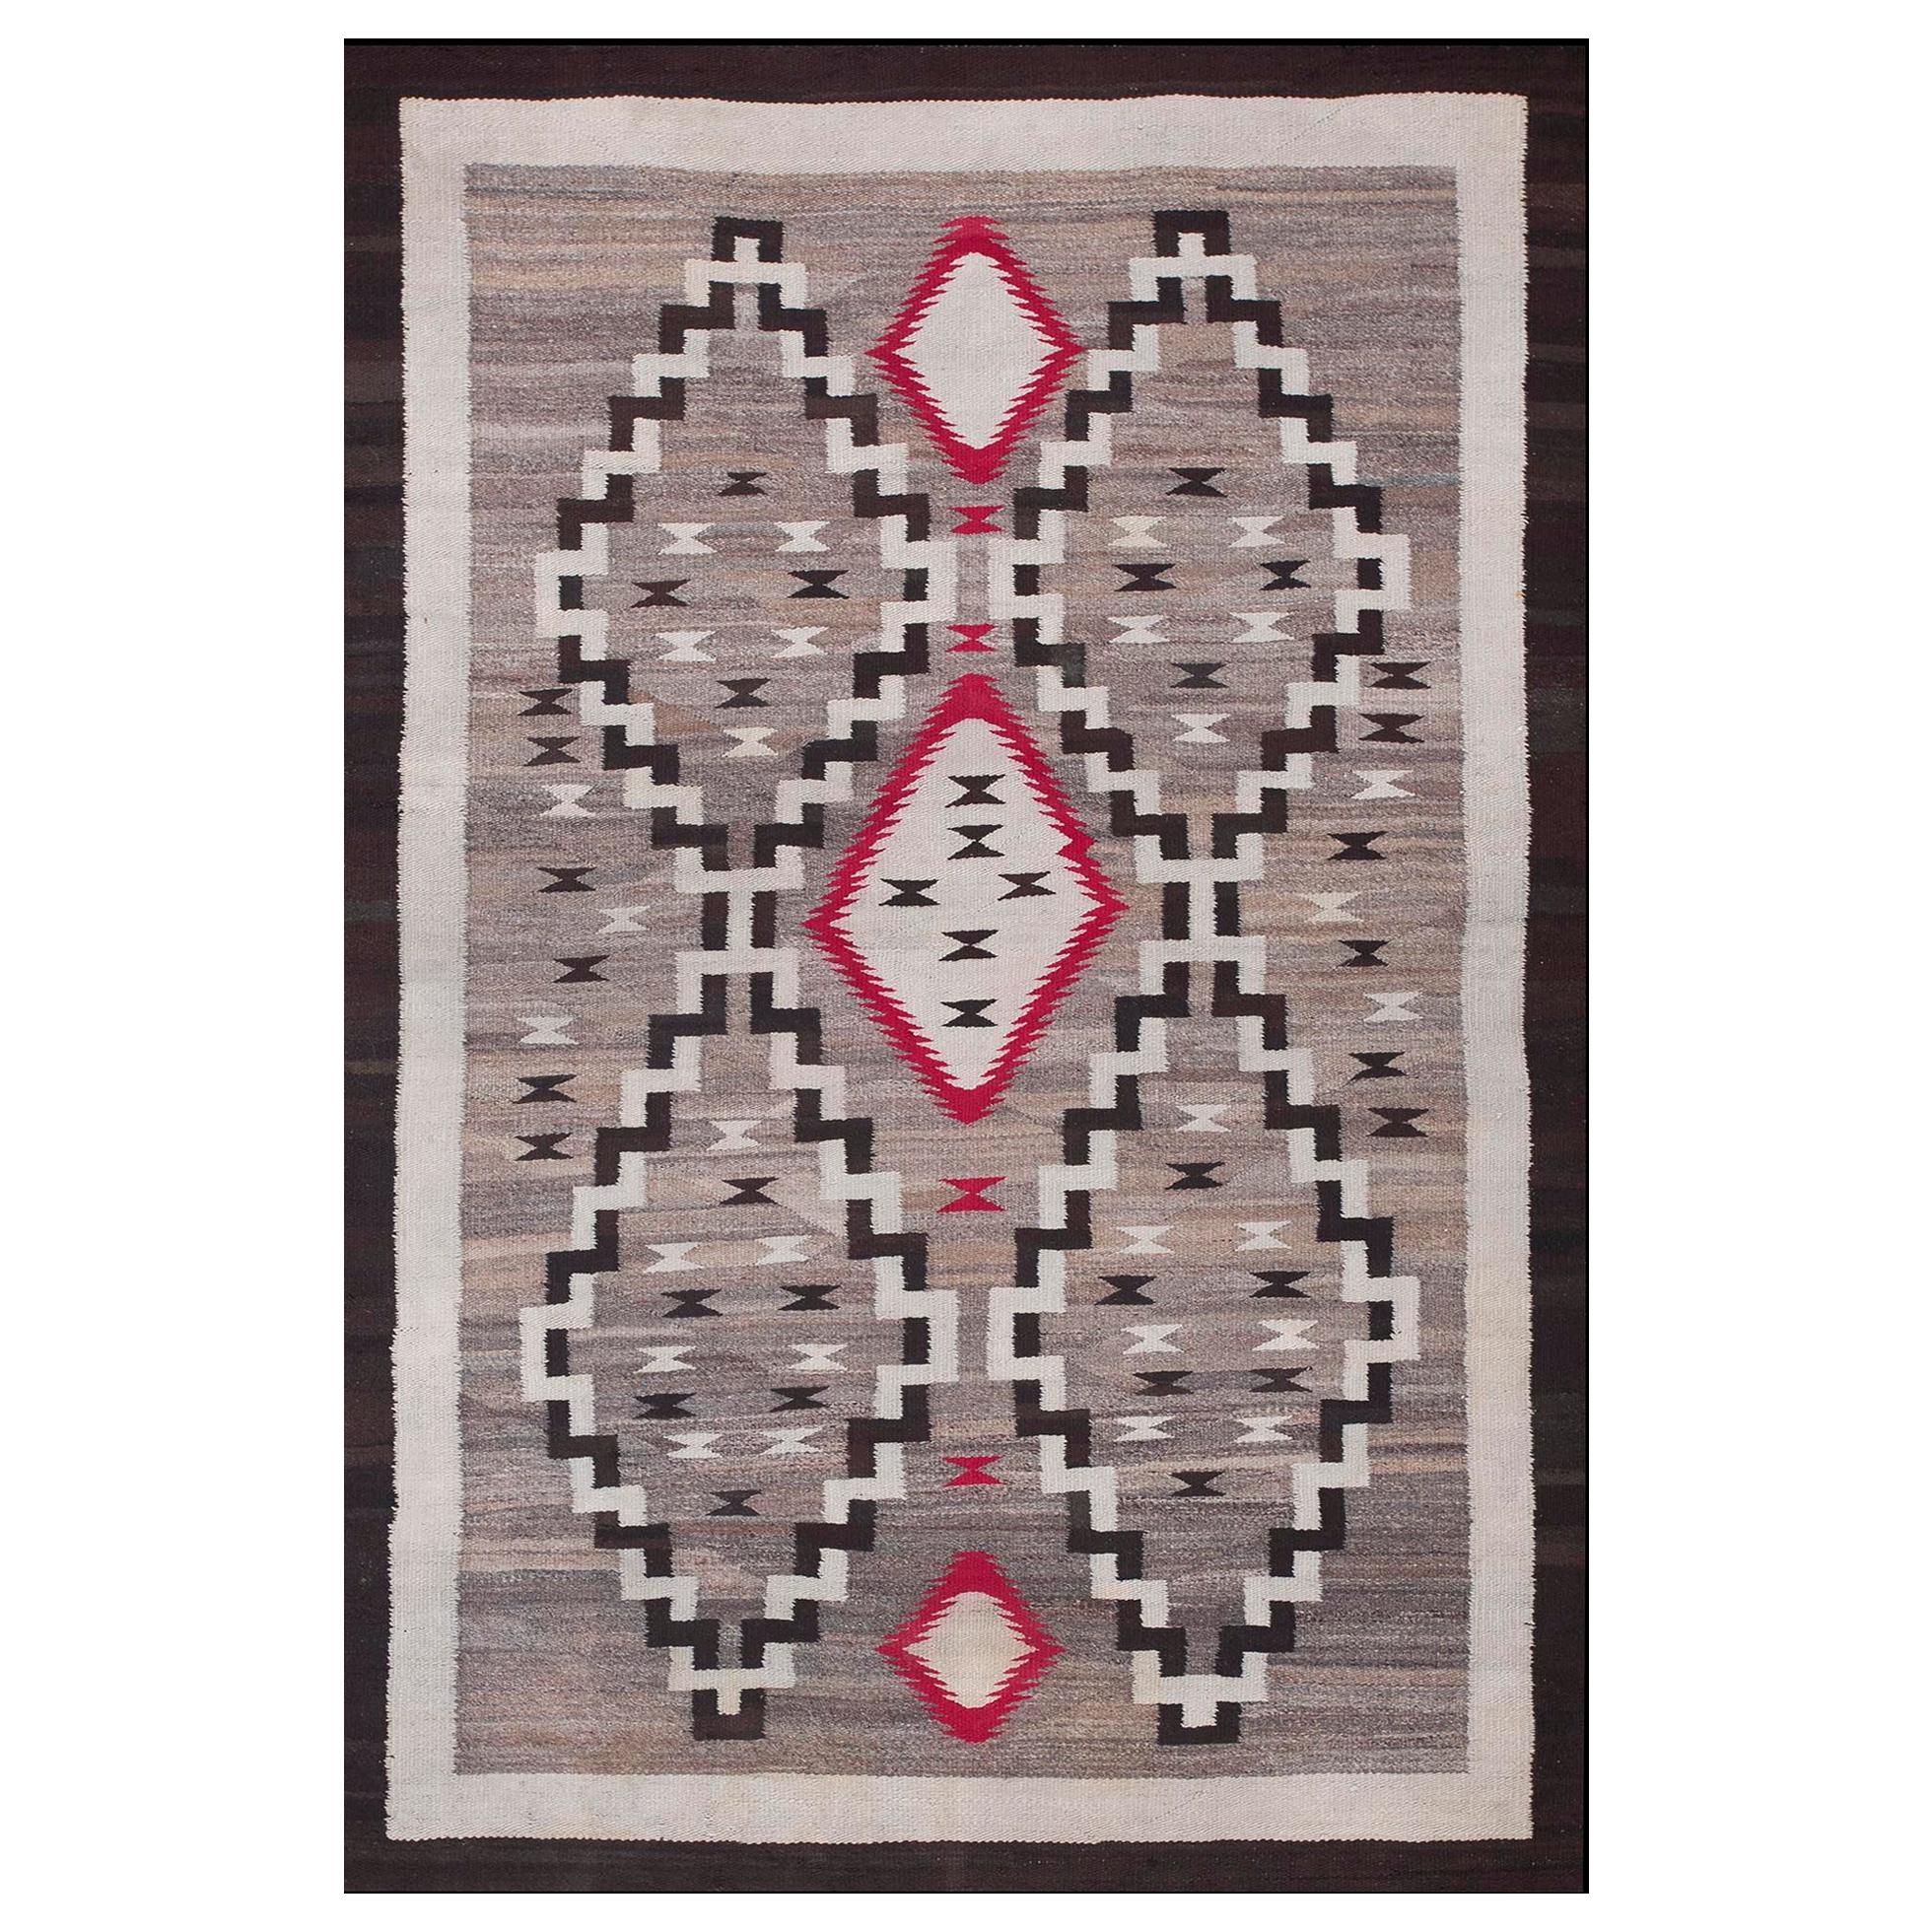 Antique American Navajo Carpet